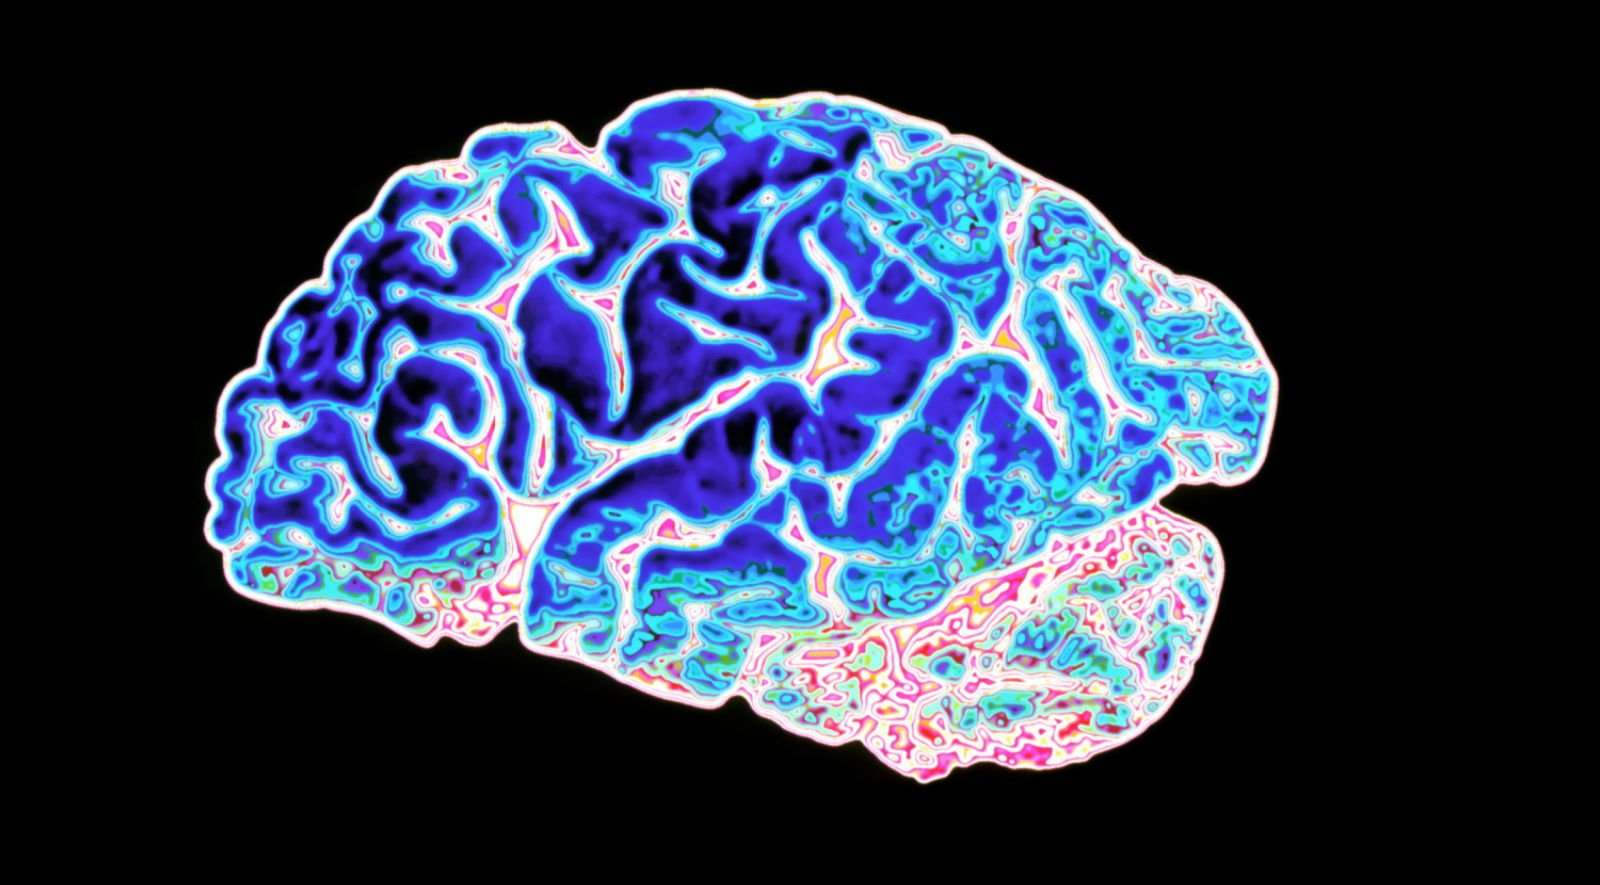 Оброблене зображення мозку пацієнта з хворобою Альцгеймера. Alfred Pasieka / Getty Images